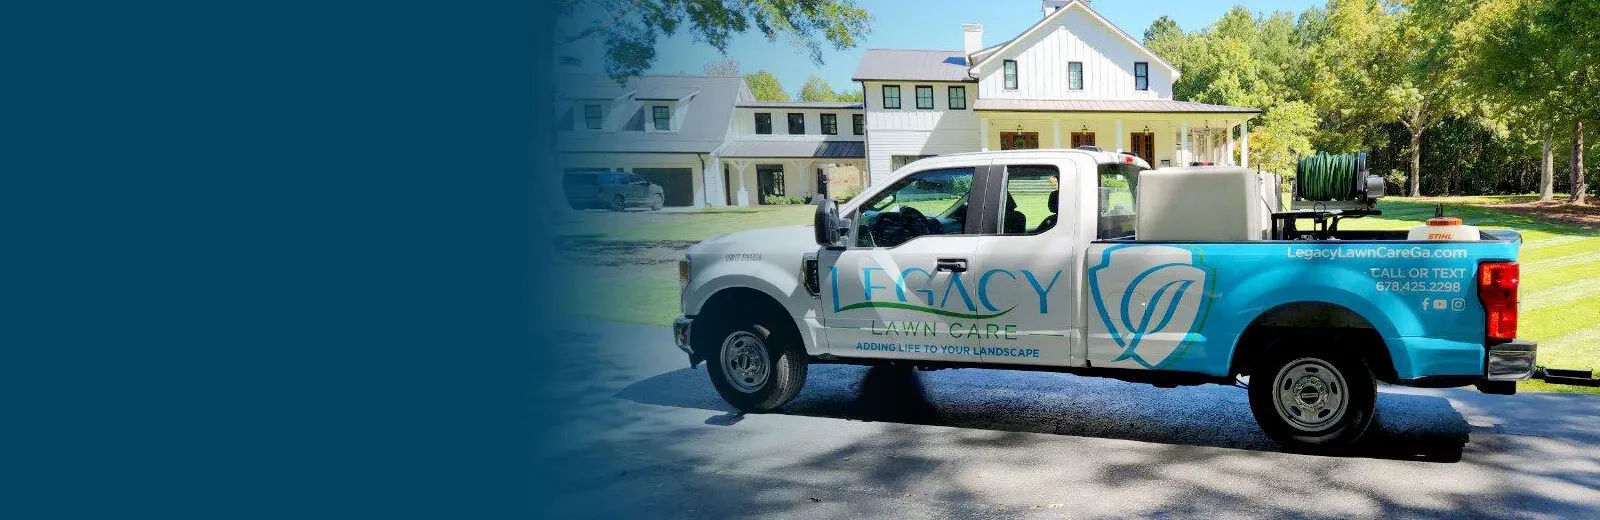 legacy-lawn-truck